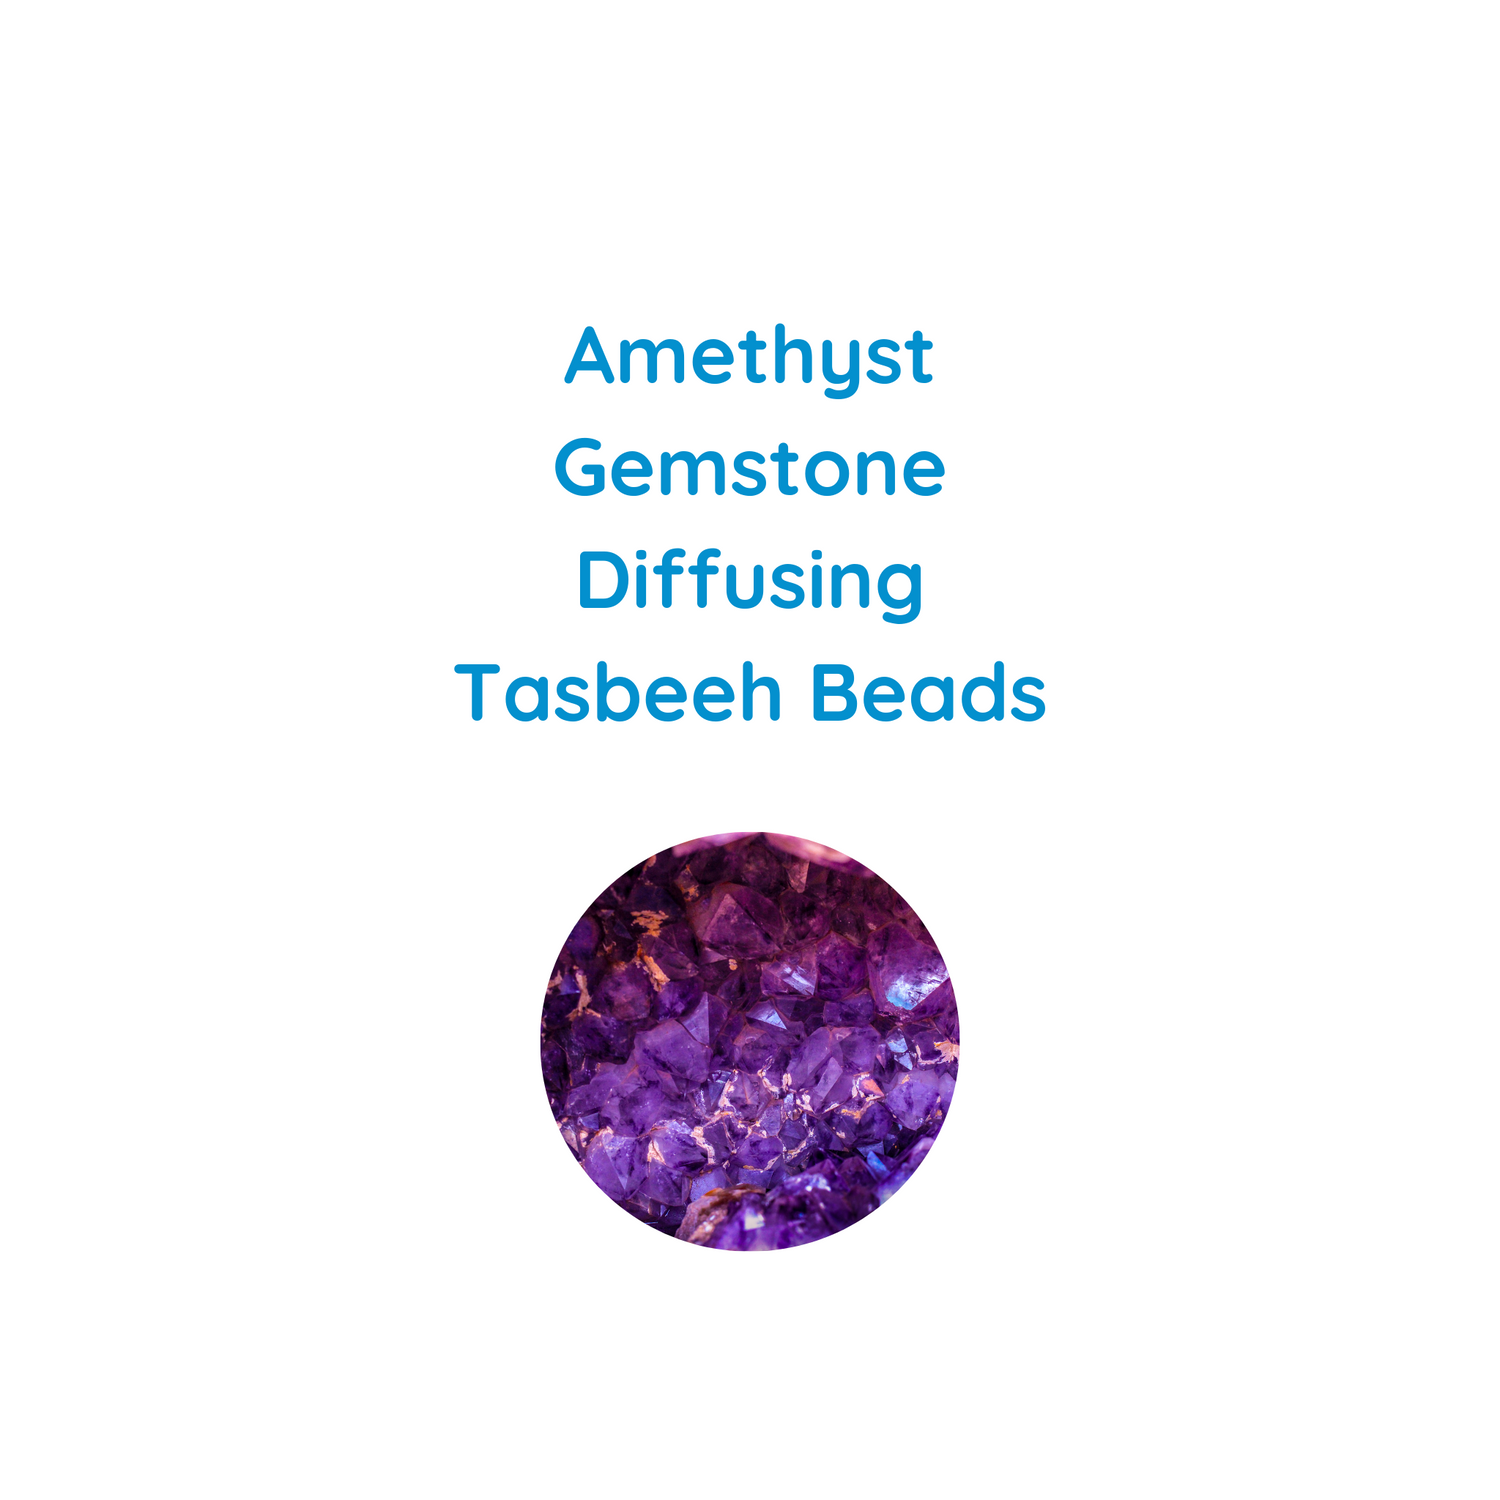 Amethyst Gemstone Diffusing Tasbeeh Beads